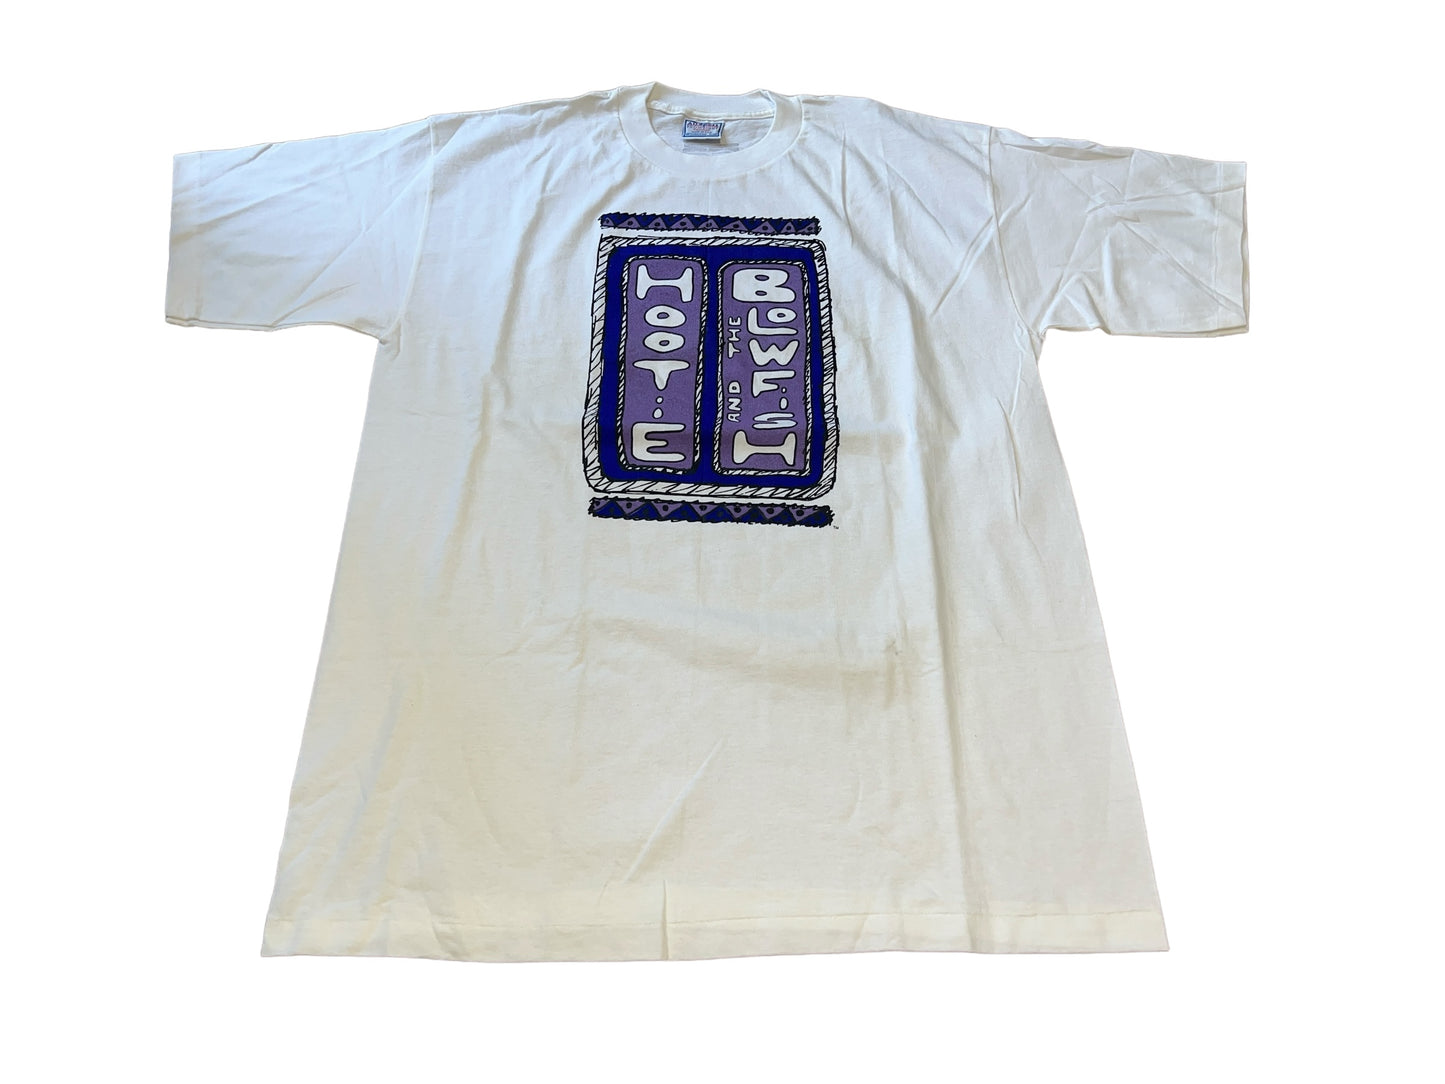 Vintage 90's Hootie & The Blowfish T-Shirt